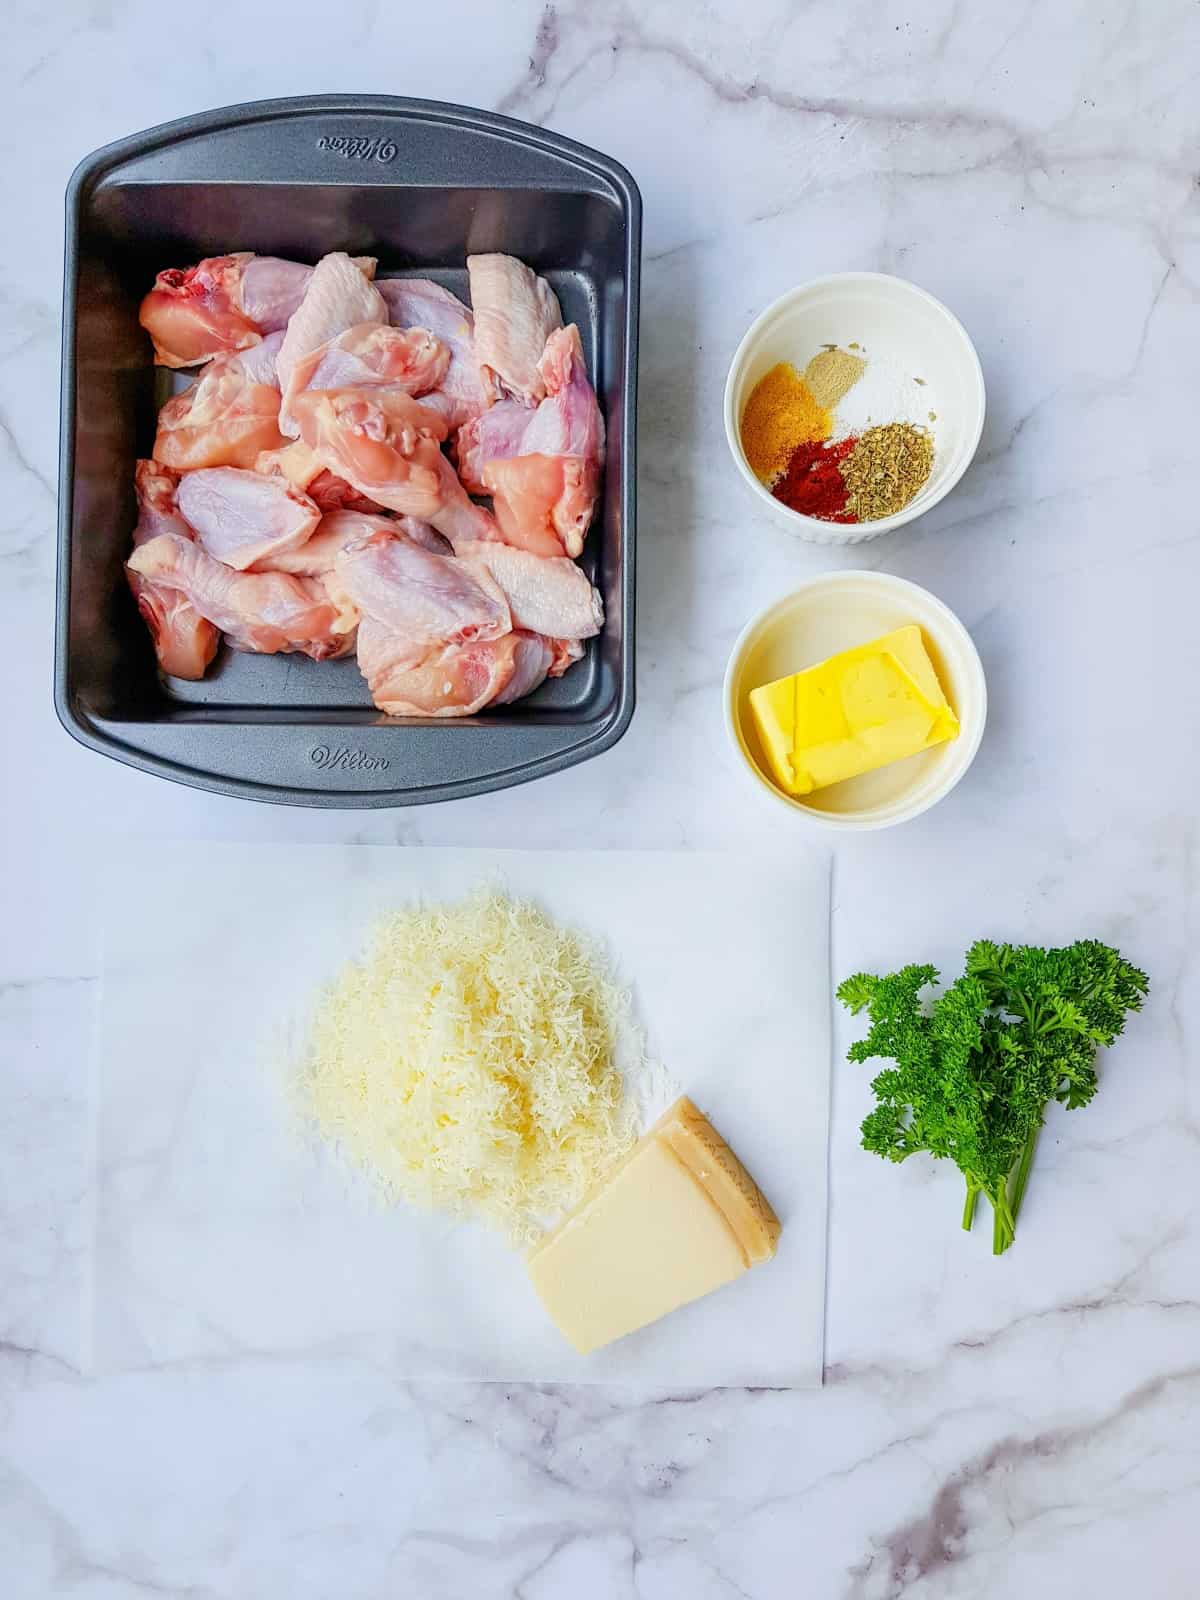 Ingredients for Baked Garlic Parmesan Chicken Wings